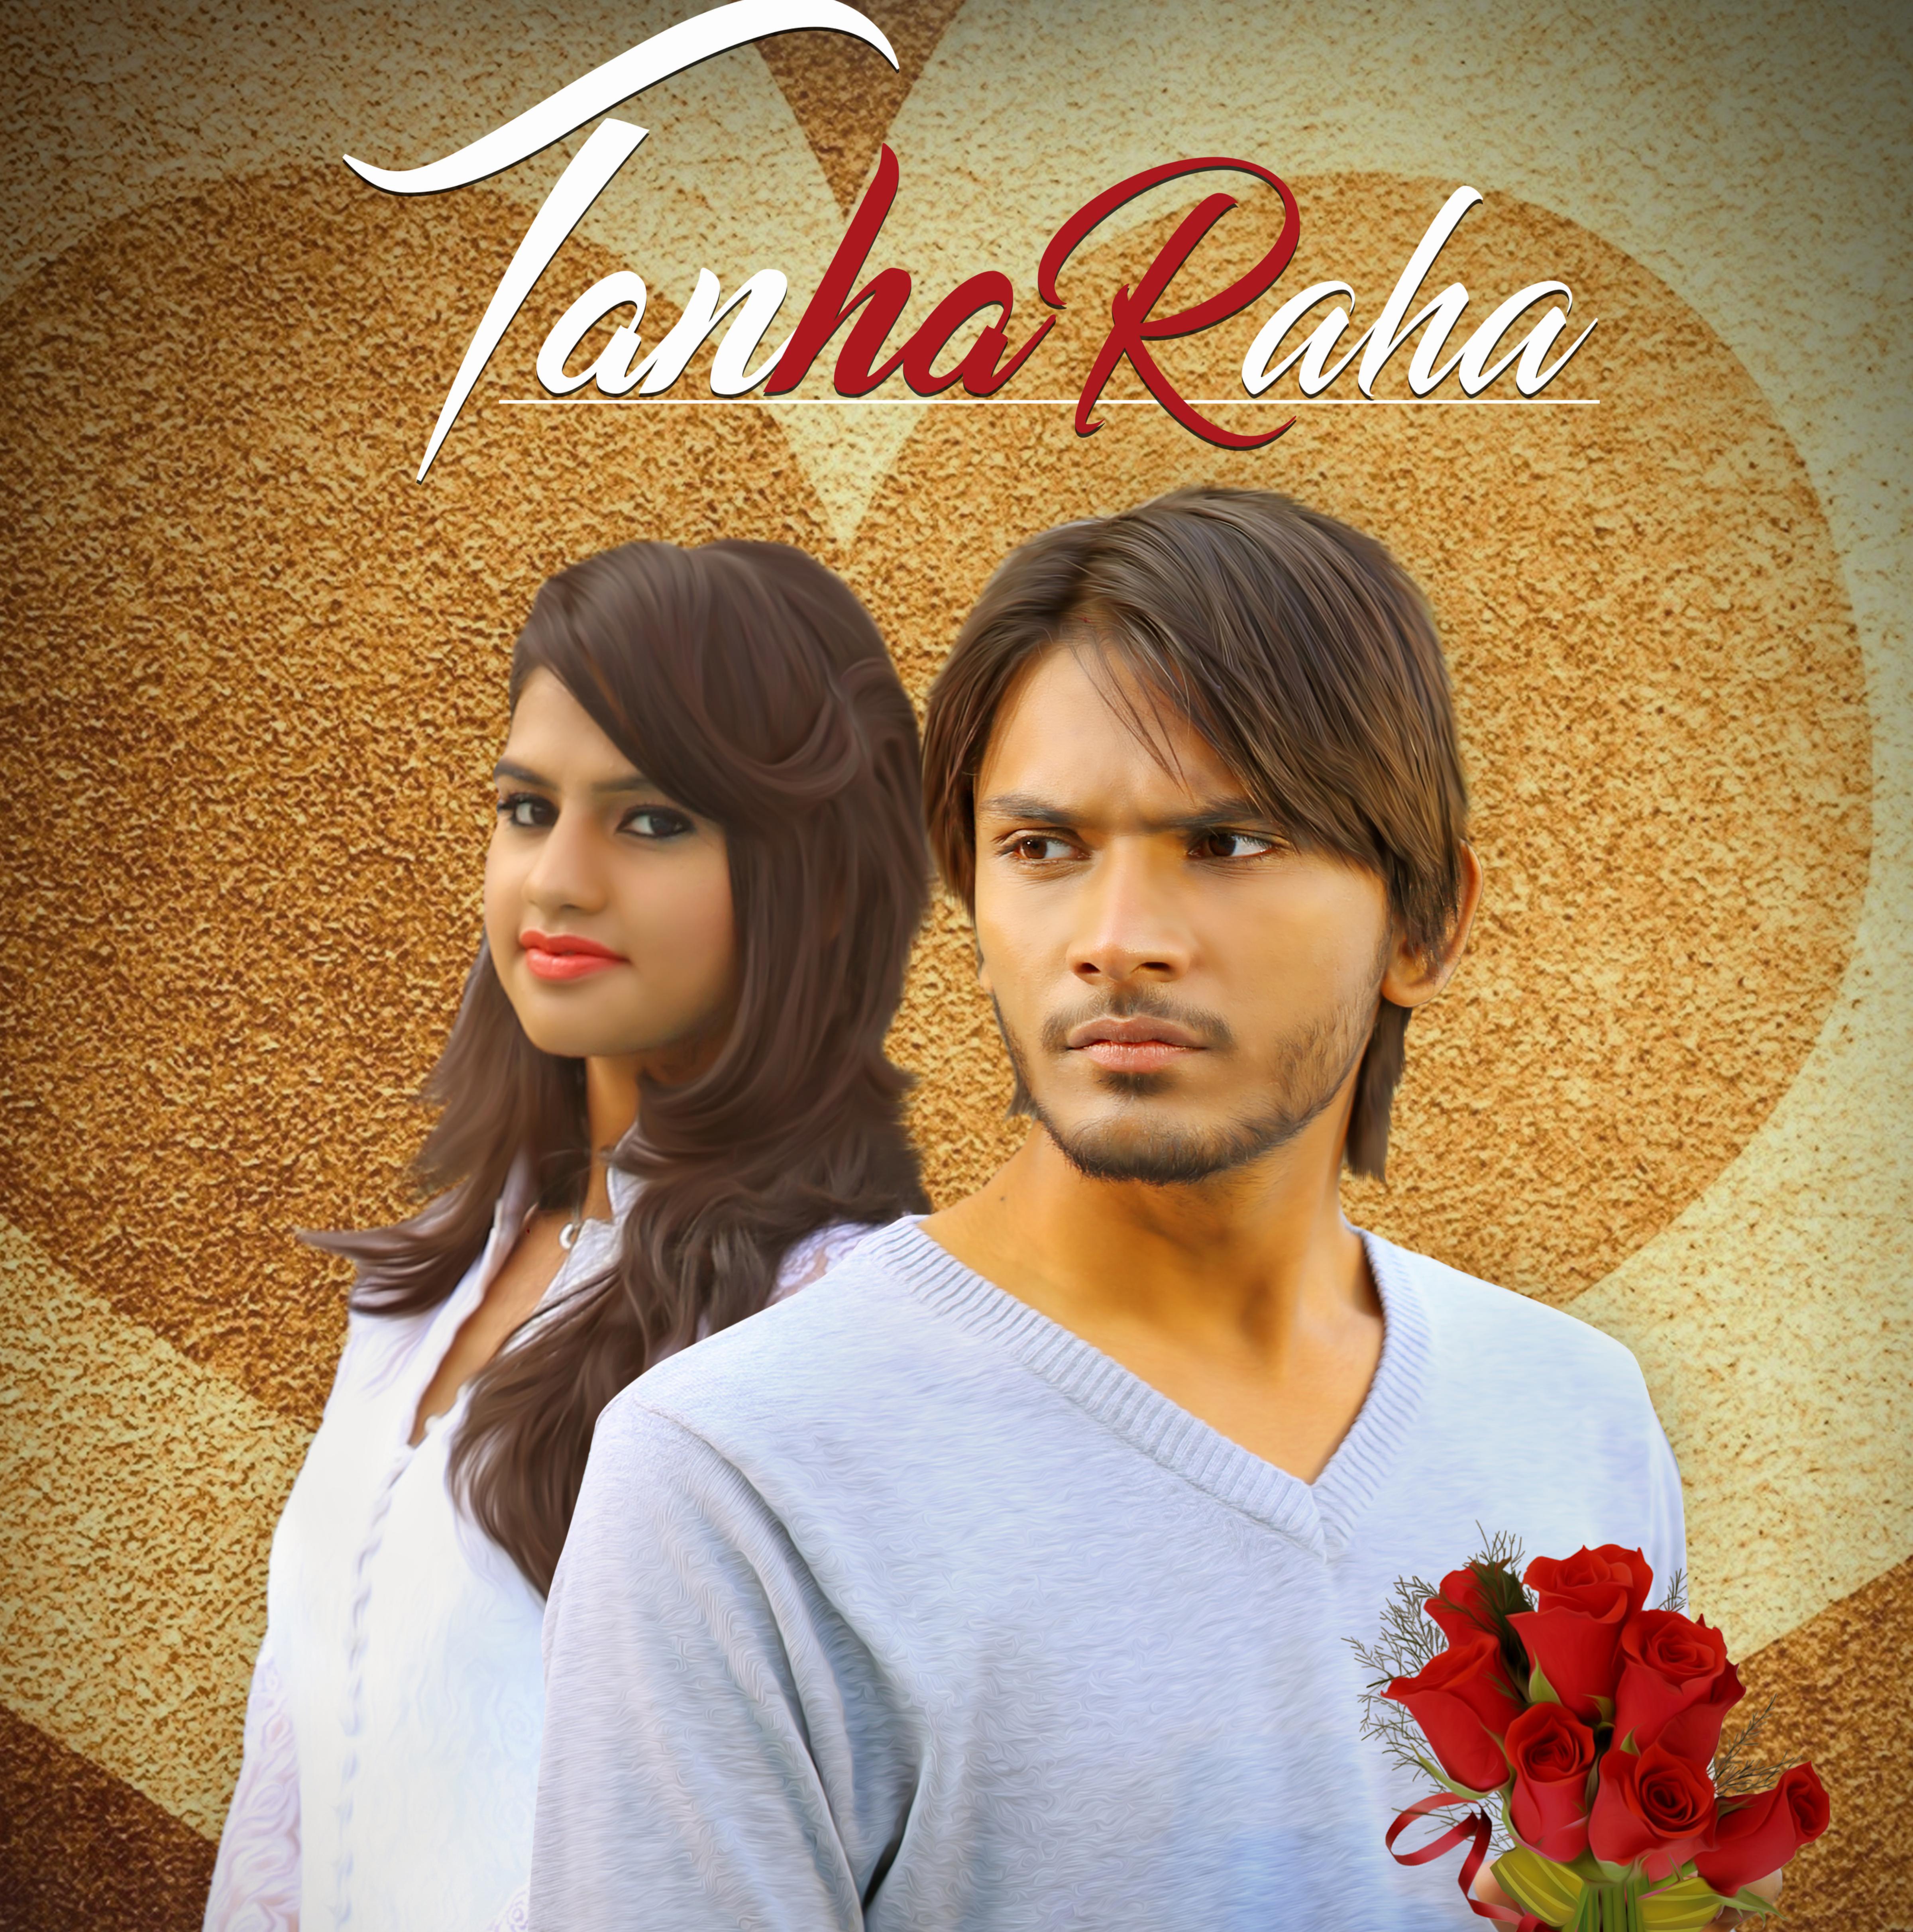 Tanha Raha heartbroken - Aman Yadav 